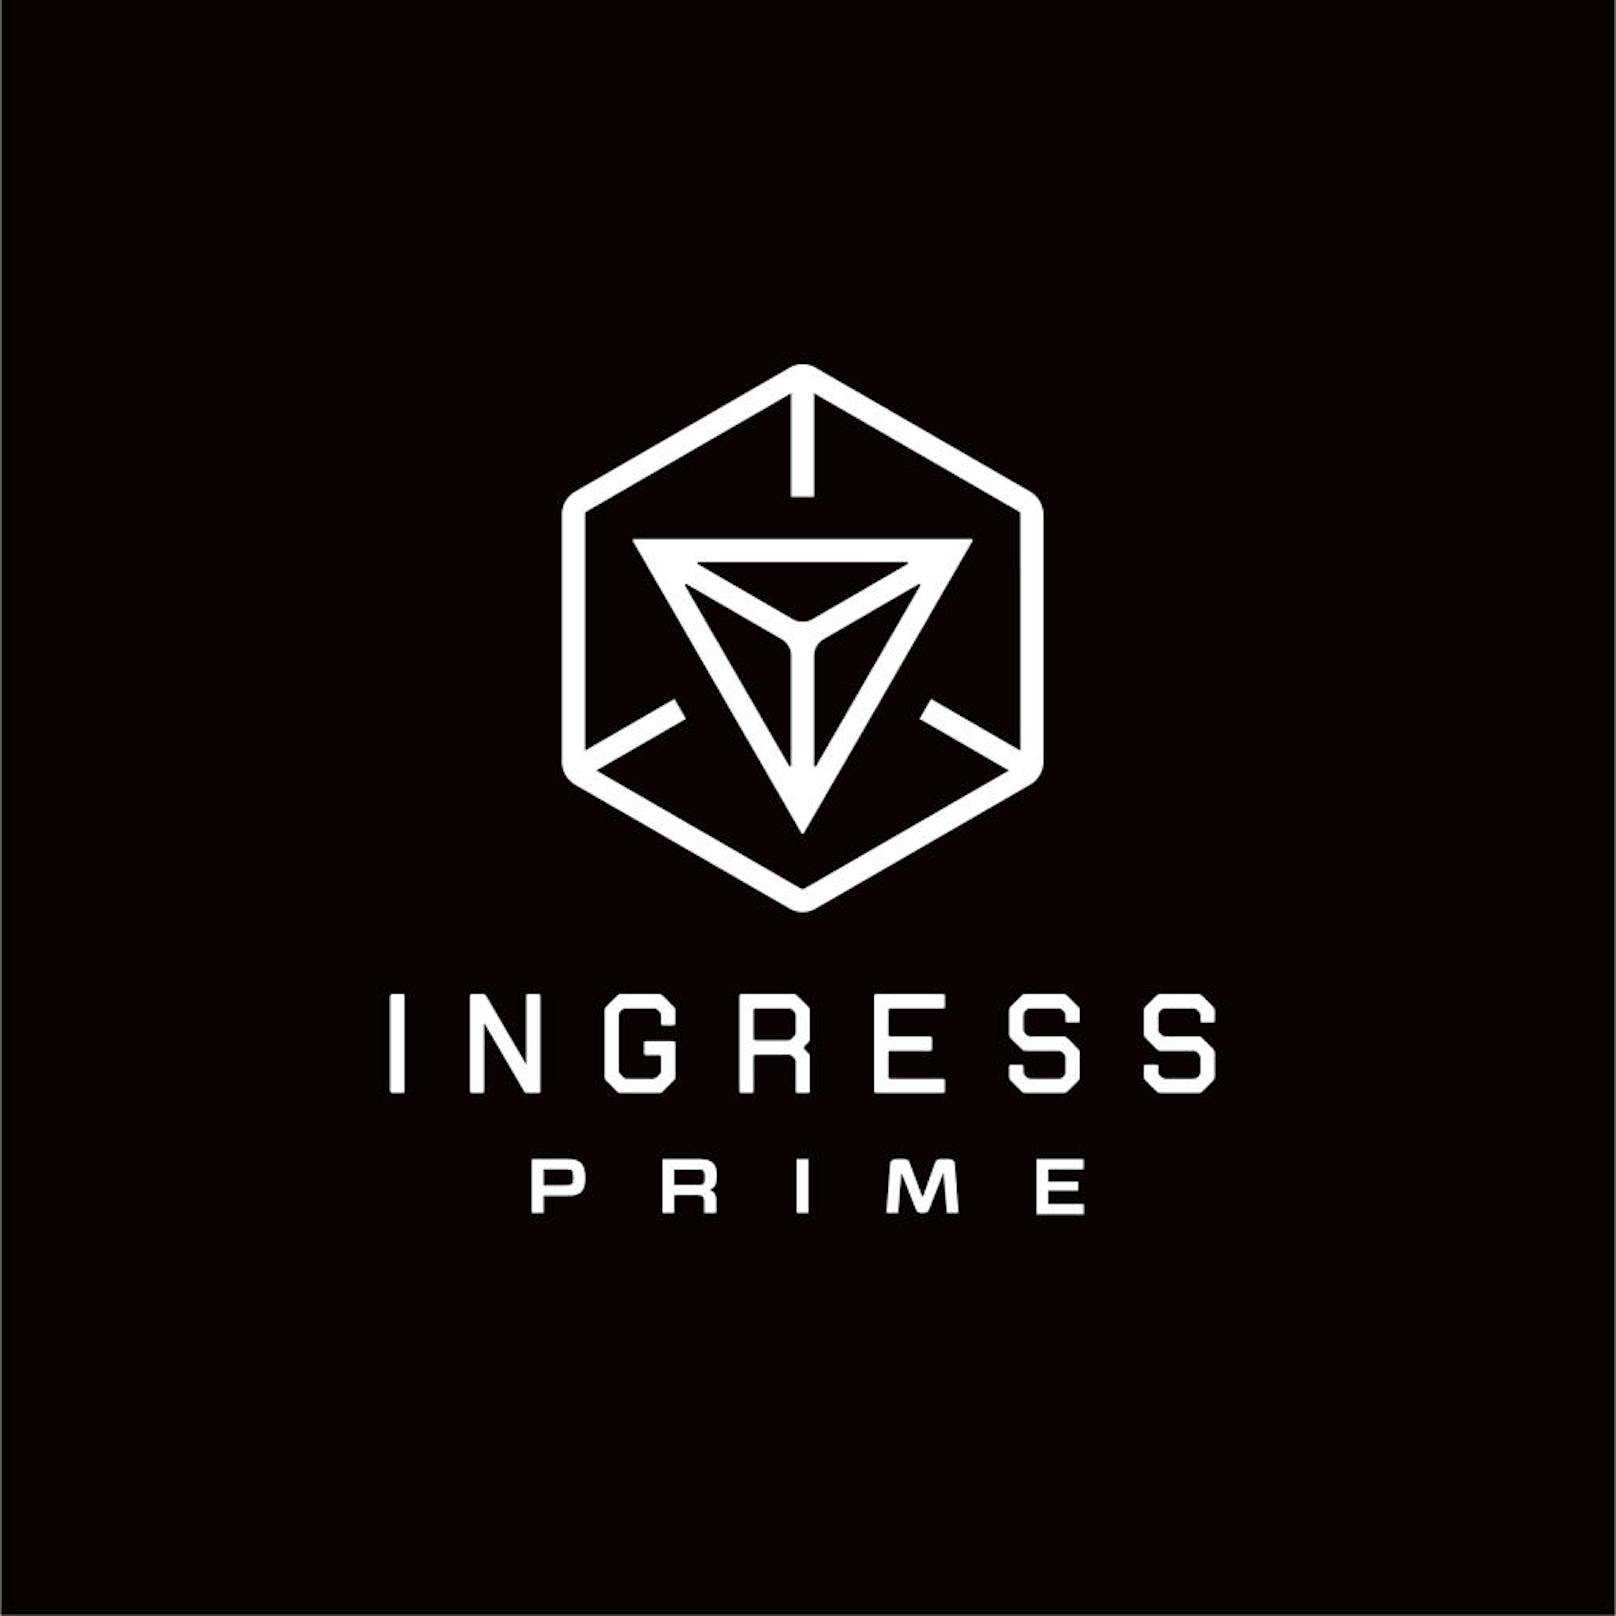 Ingress war das erste Augmented-Reality-Game überhaupt.